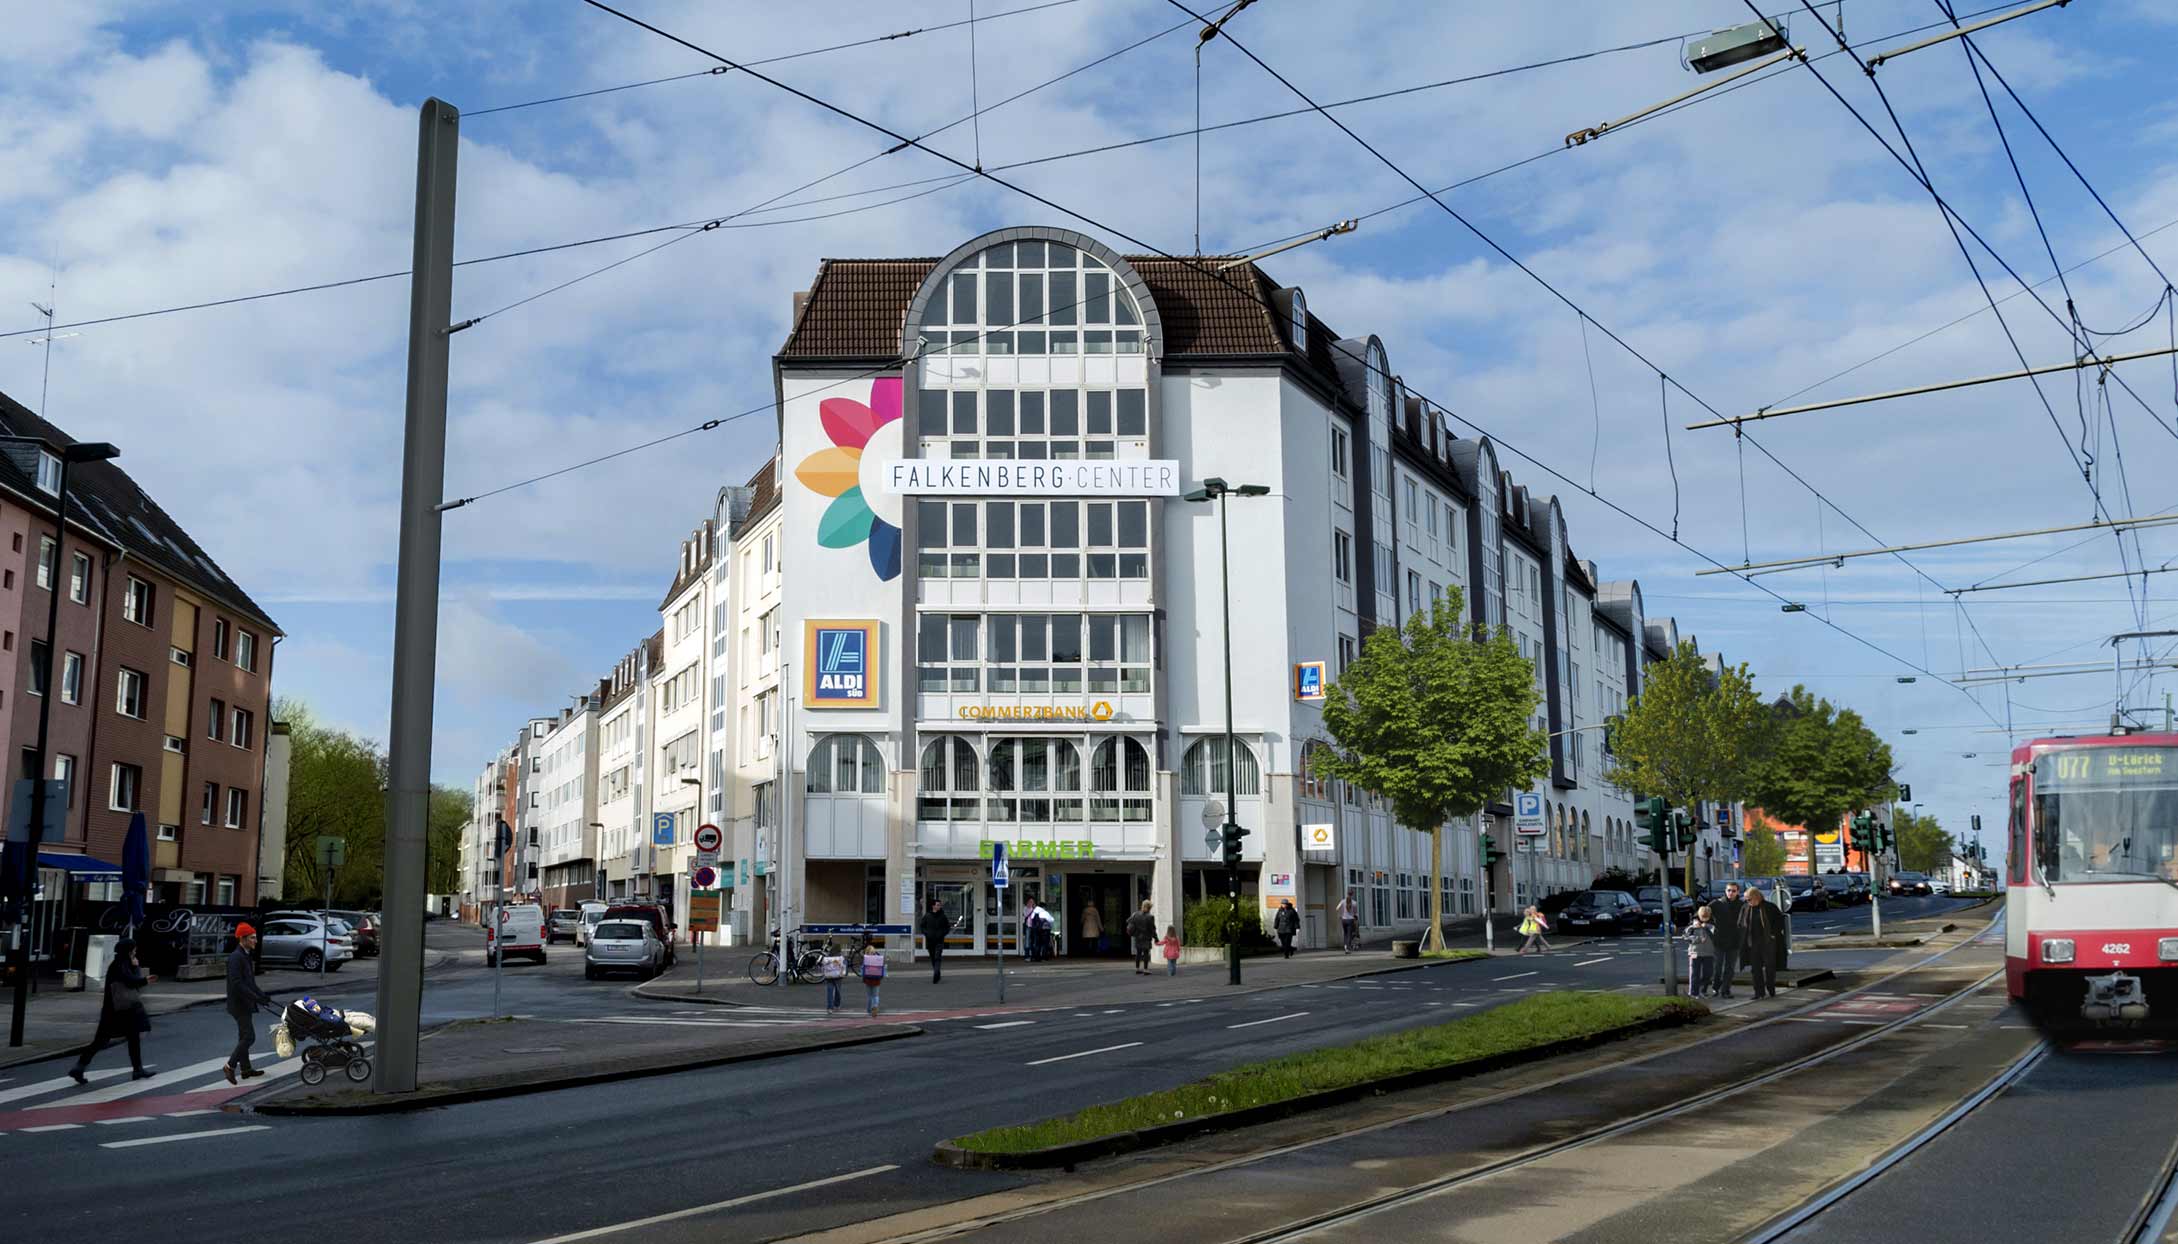 Falkenberg Center in Düsseldorf Holthausen